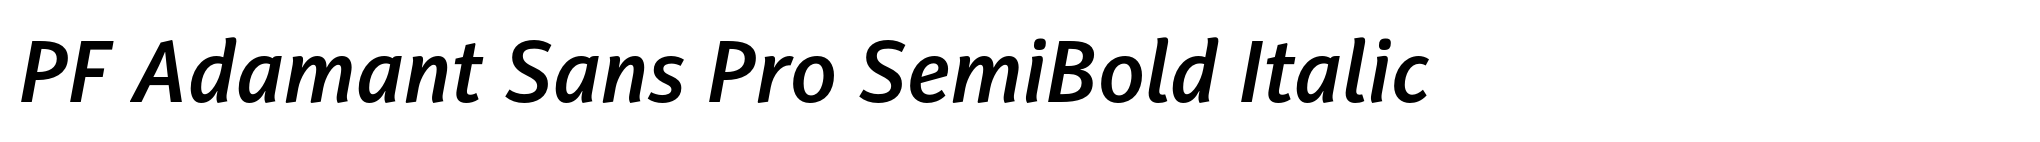 PF Adamant Sans Pro SemiBold Italic image